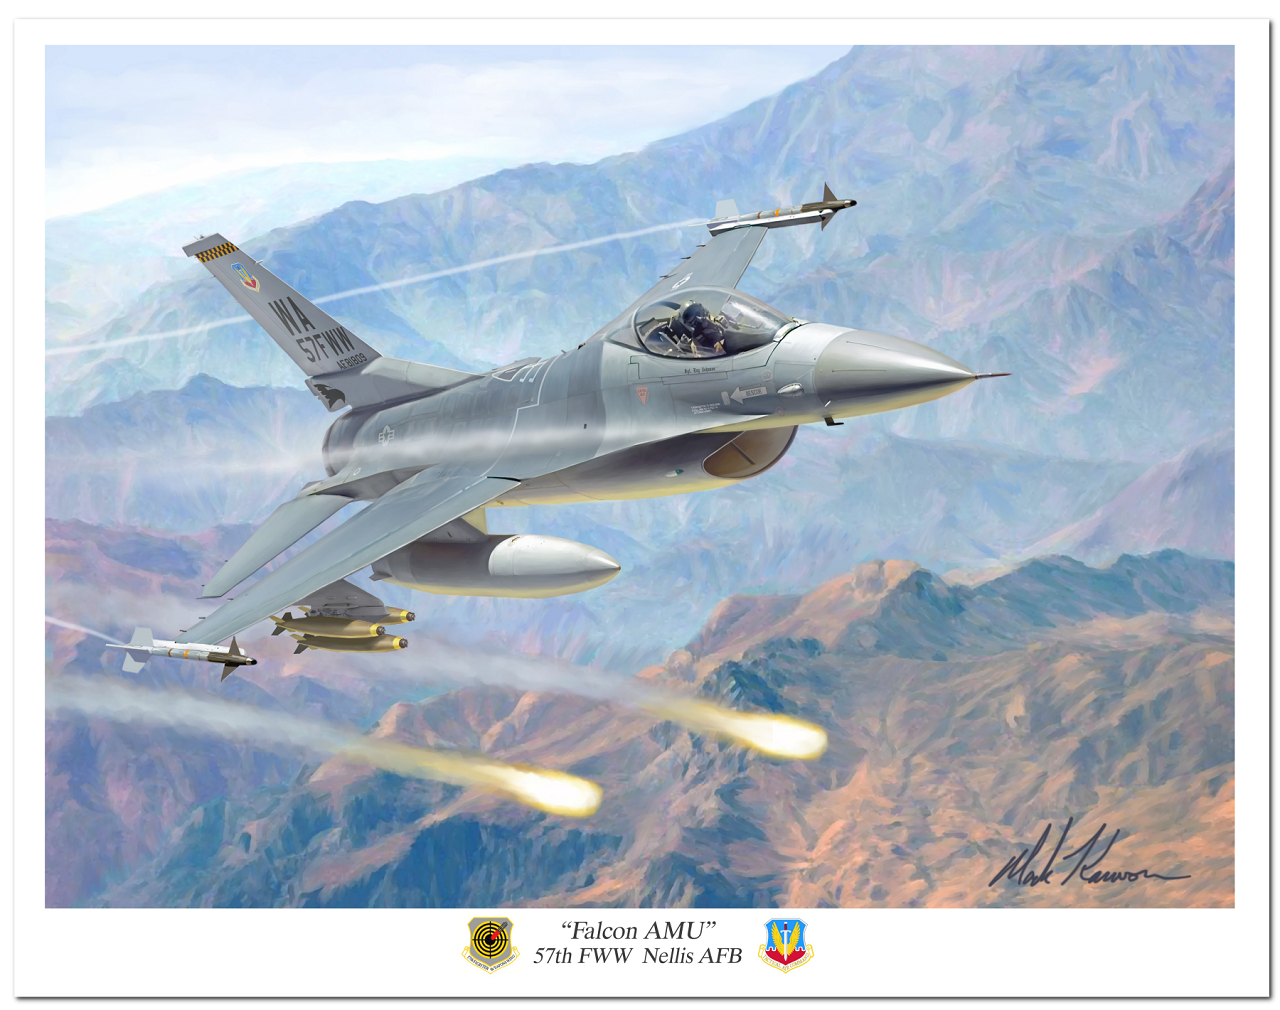 "Falcon AMU" by Mark Karvon featuring the USAF F-16 Fighting Falcon